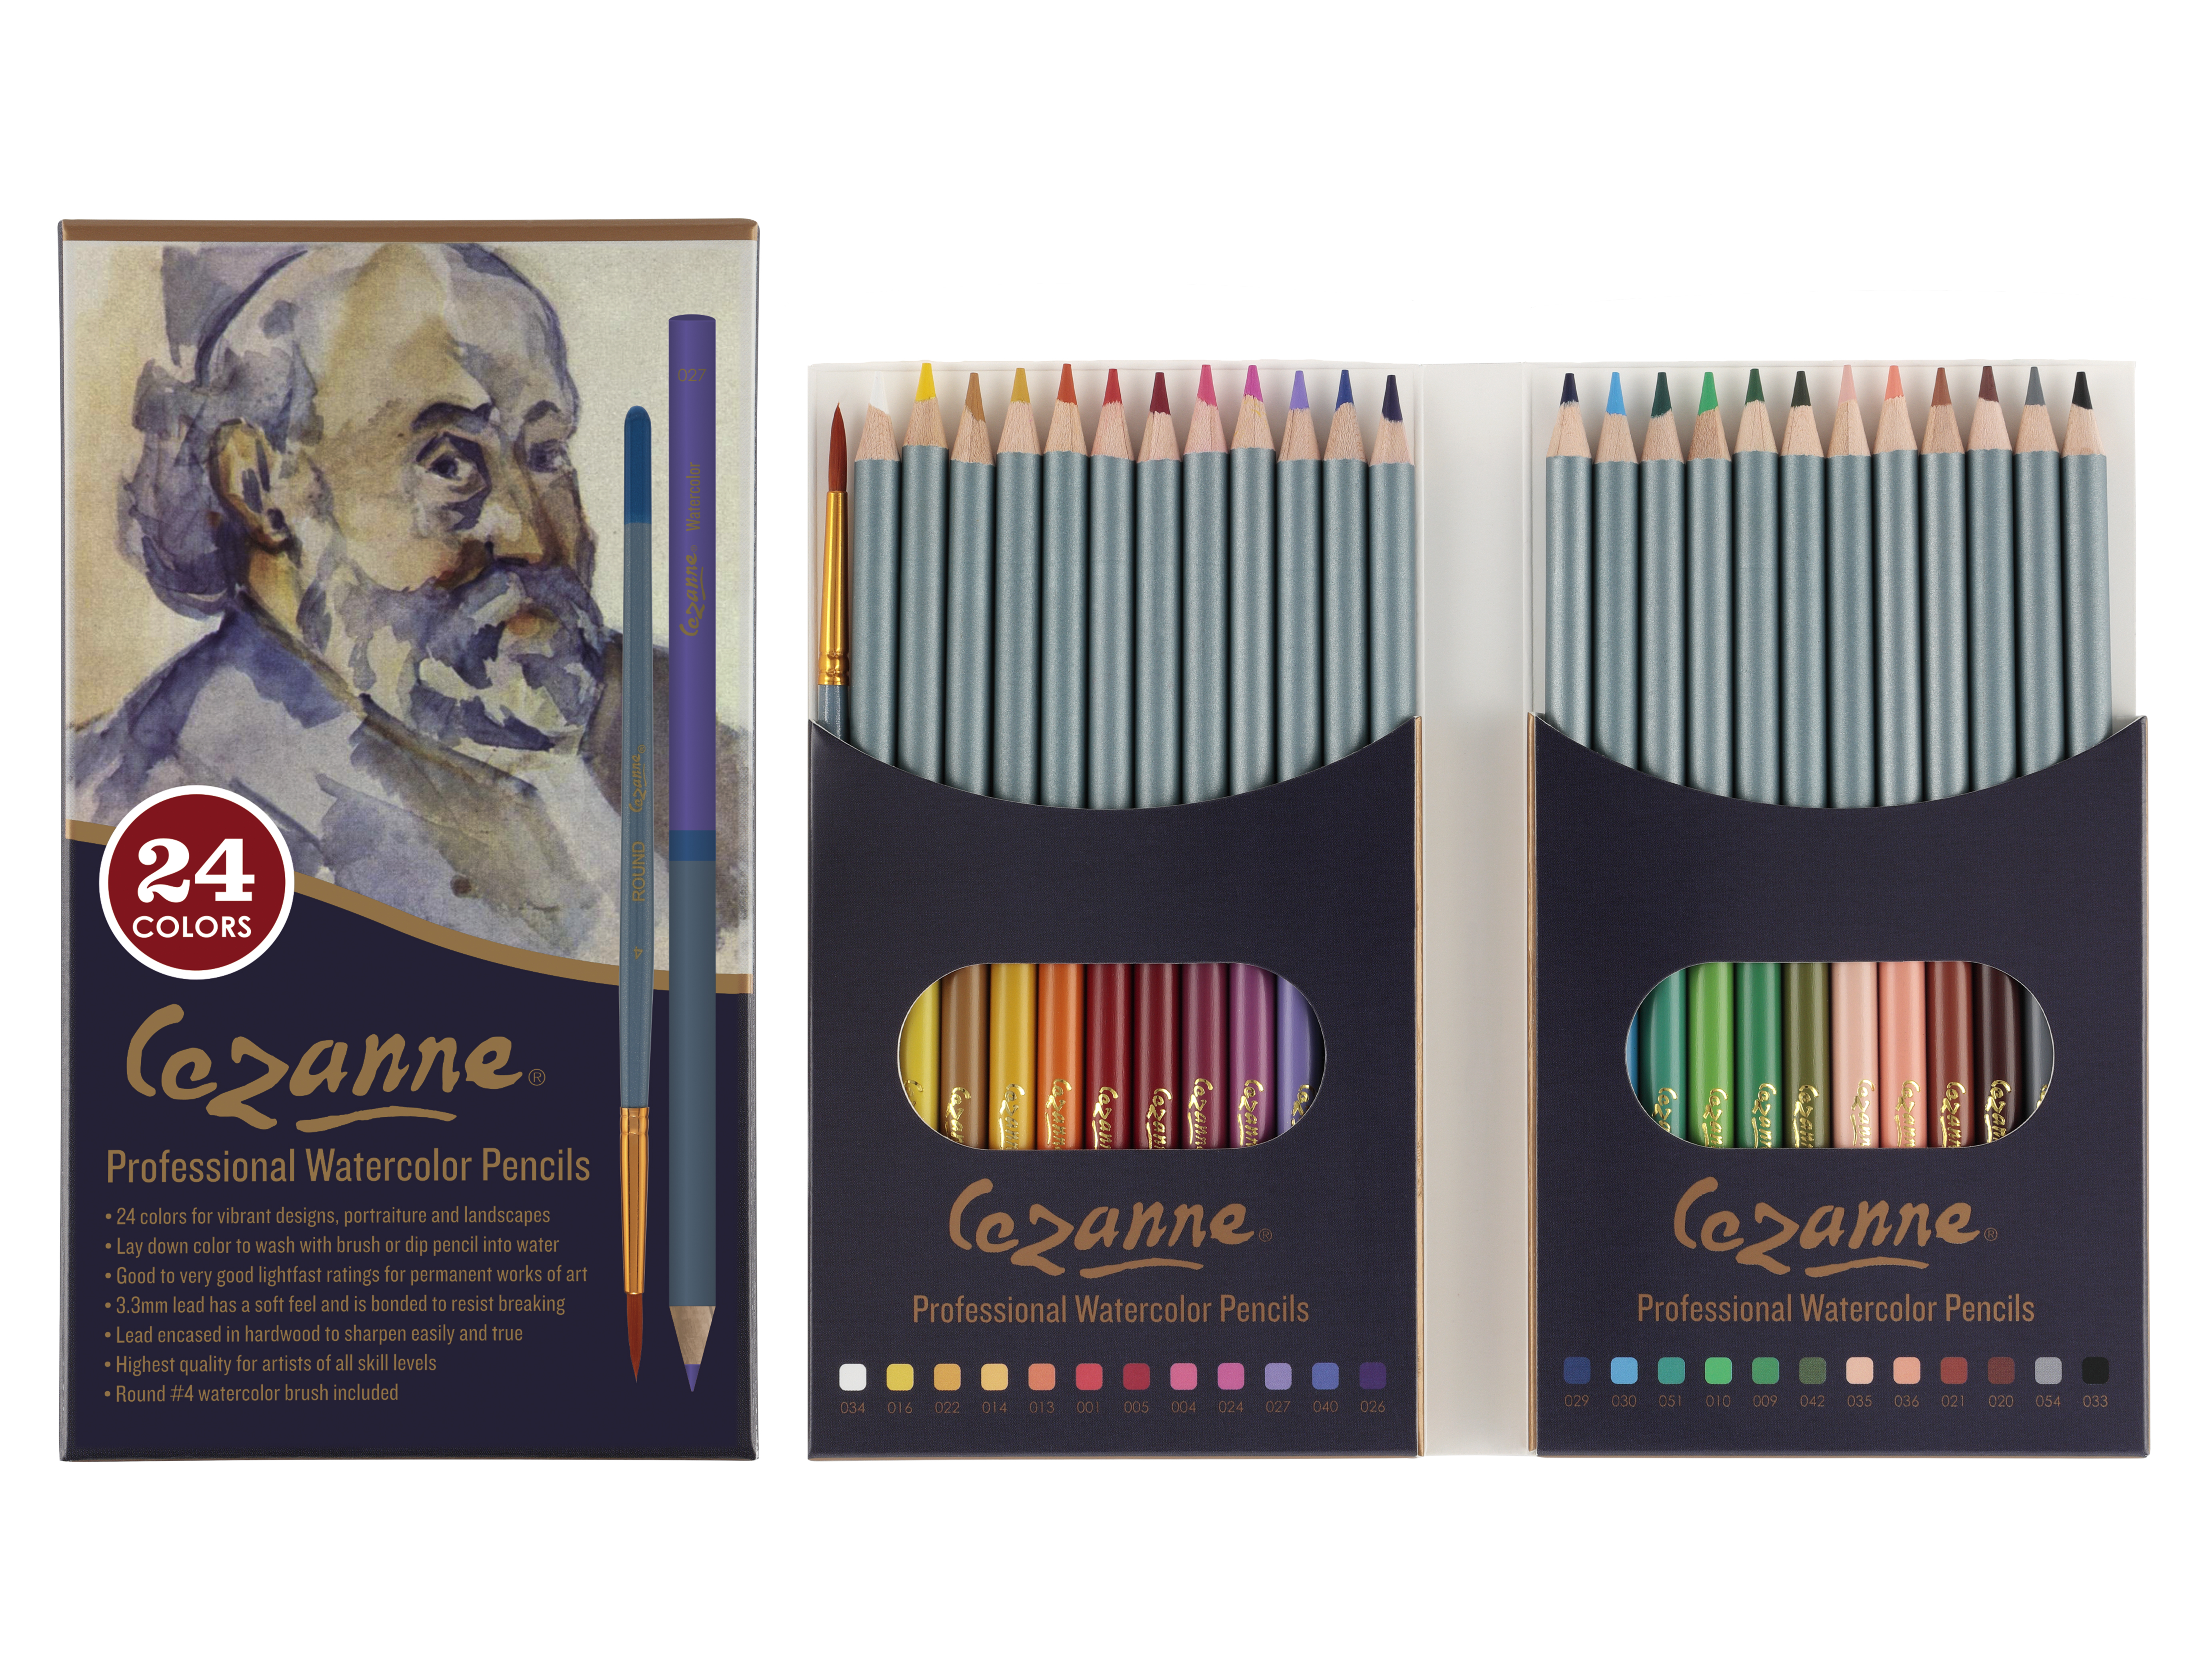 Cezanne Watercolor Pencils - Professional Artist Quality Soft Core